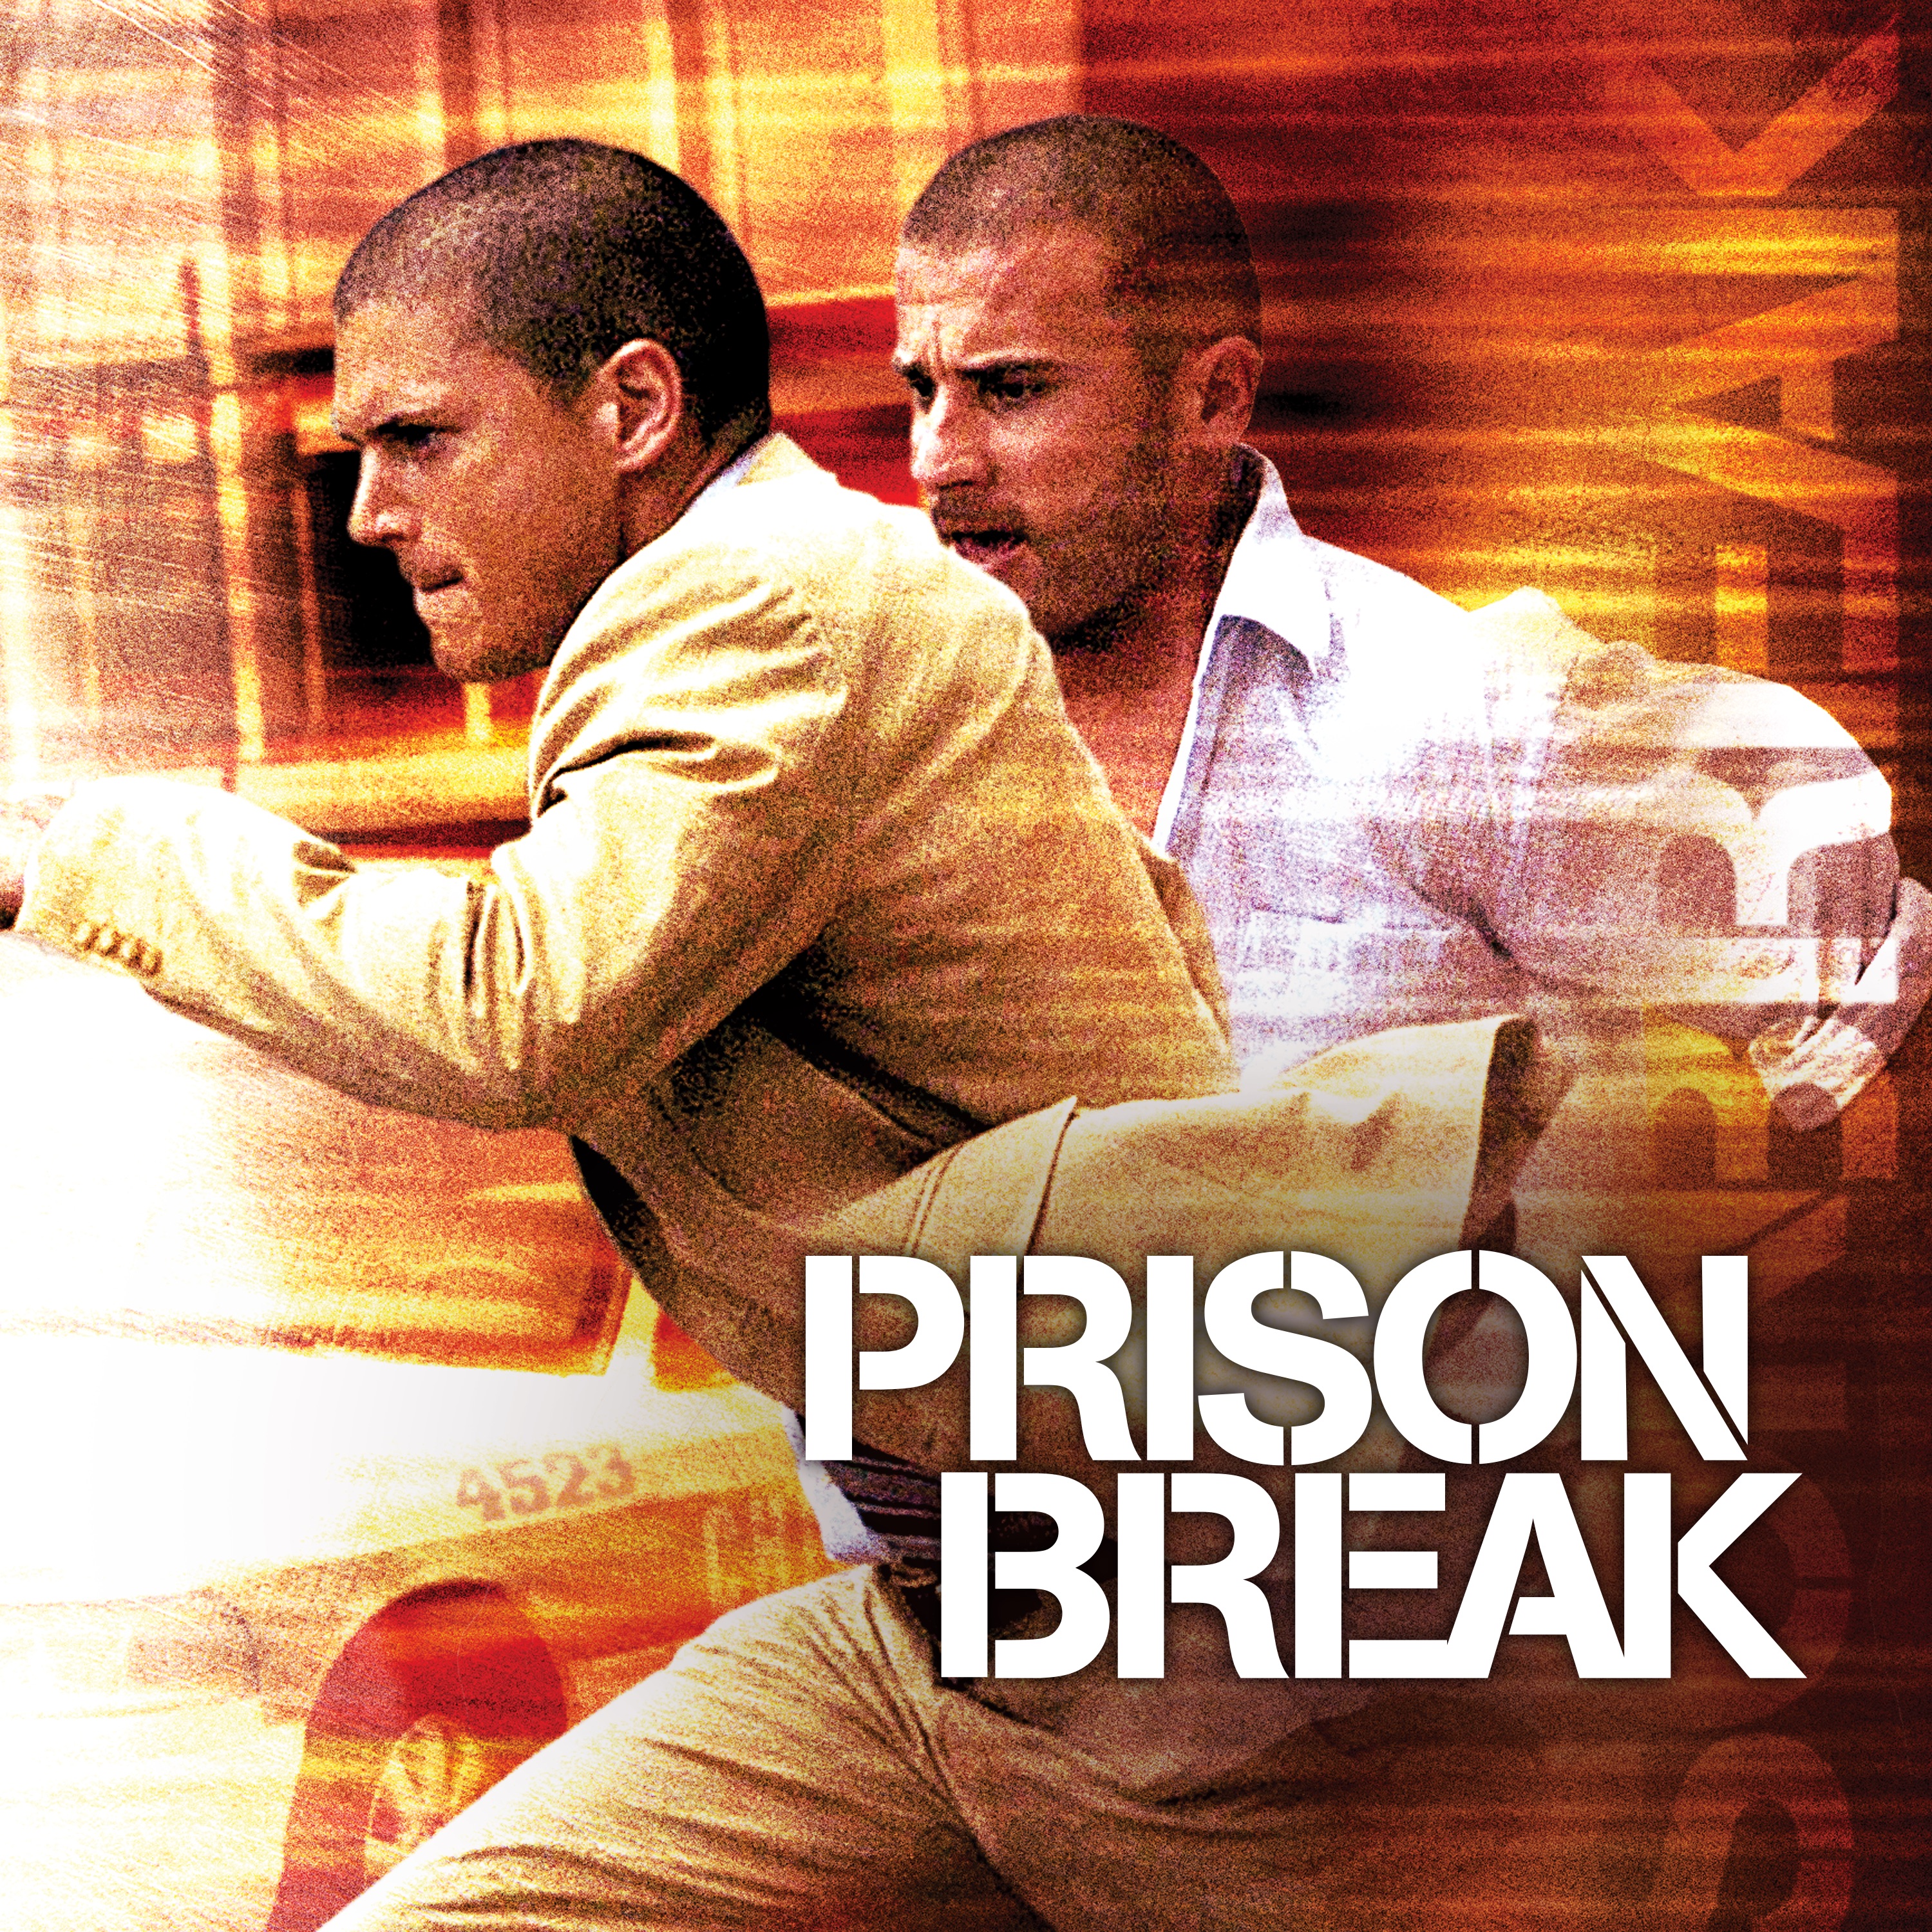 prison break season 2 subtitles english download 720p yify